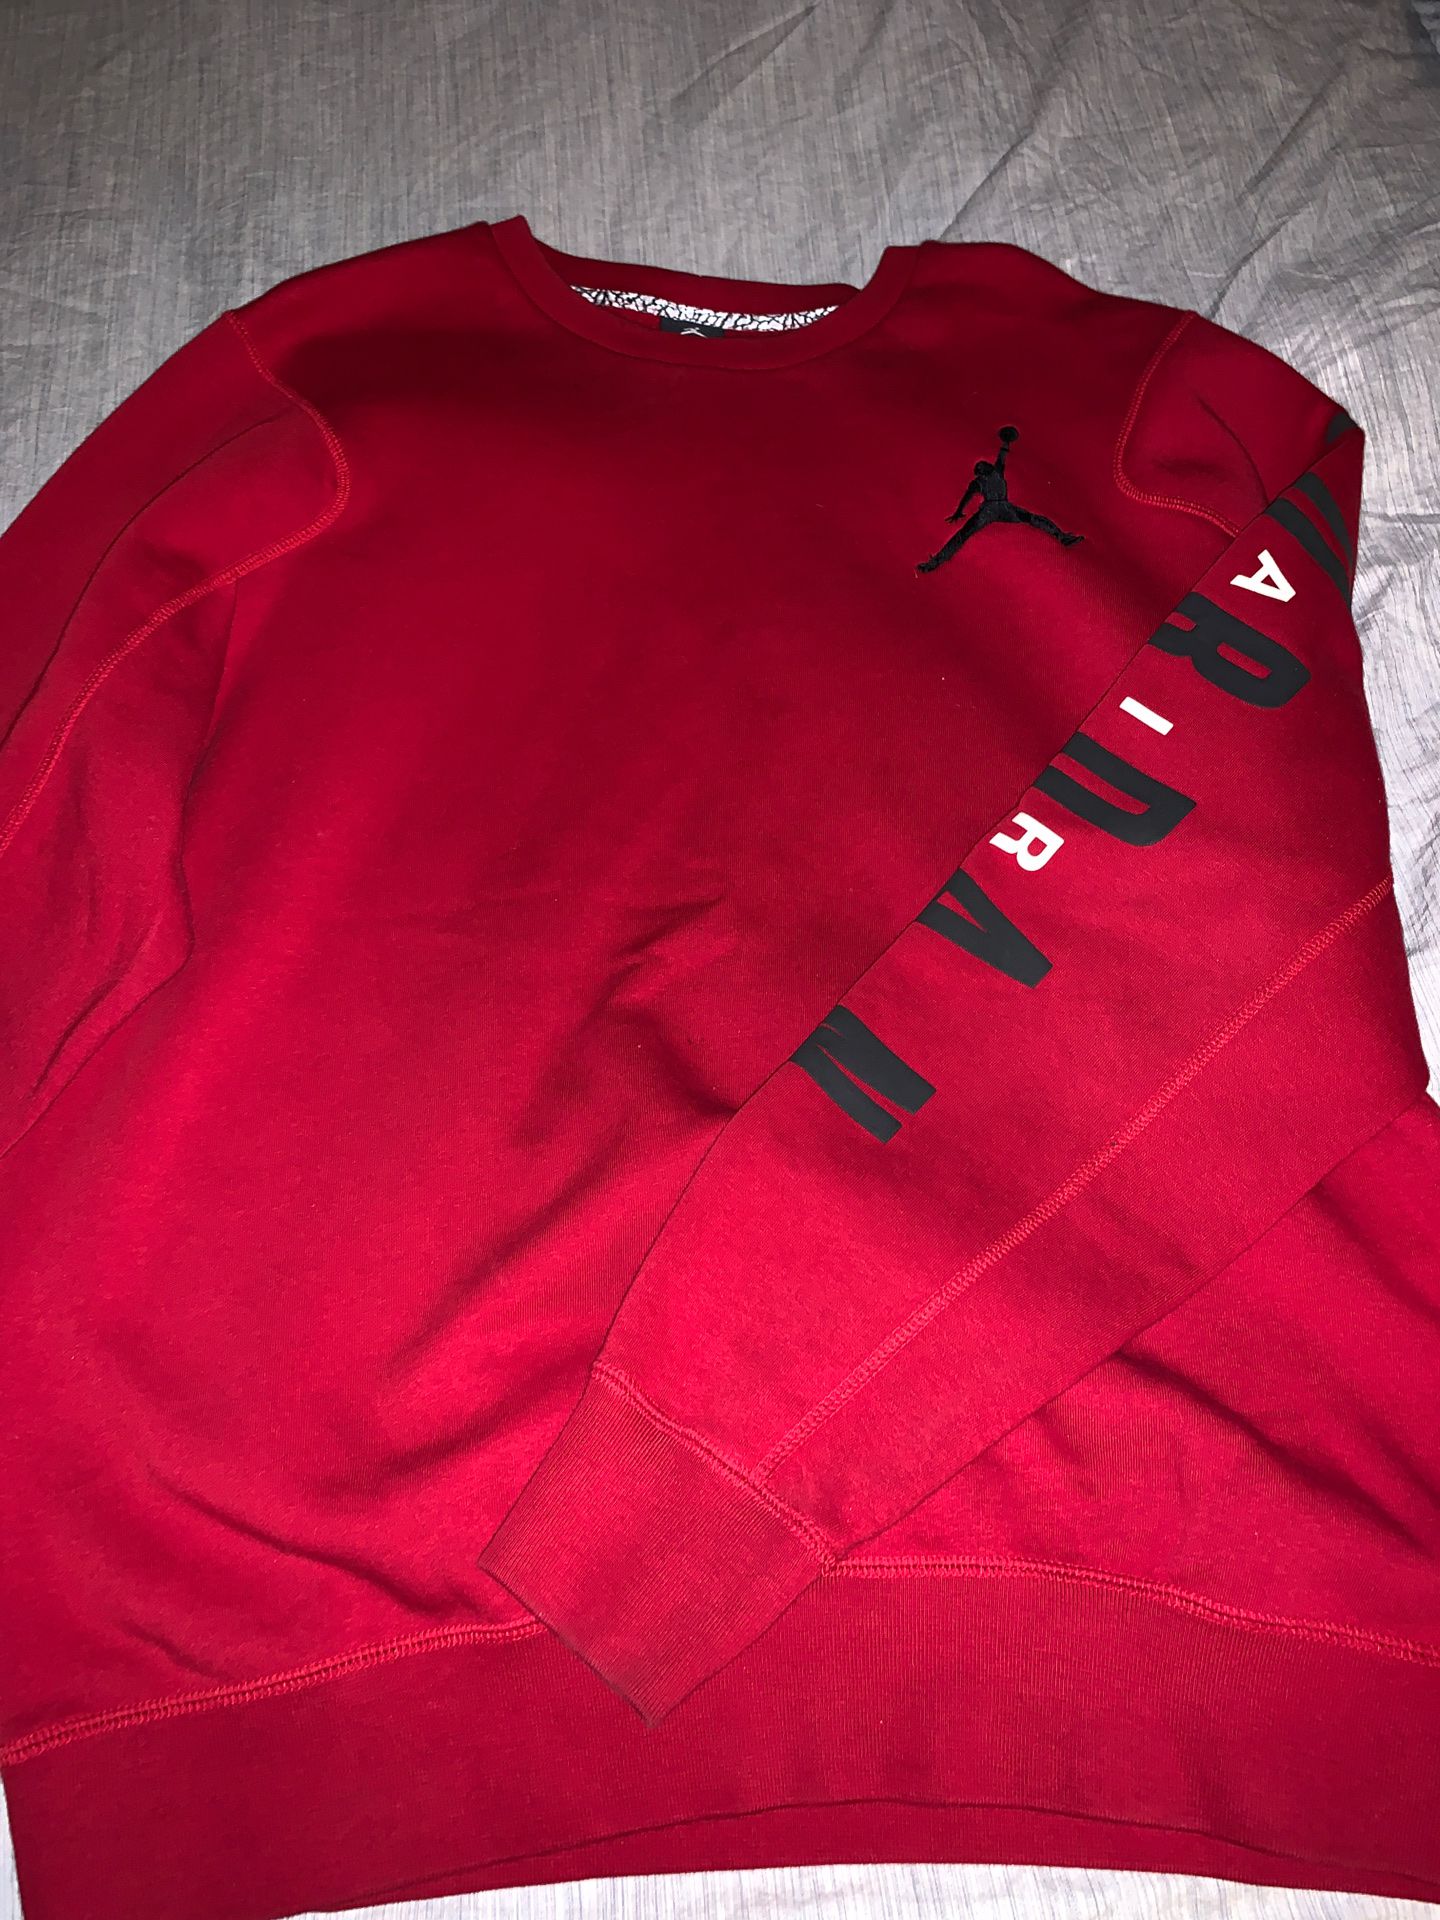 Men’s XL Jordan sweater